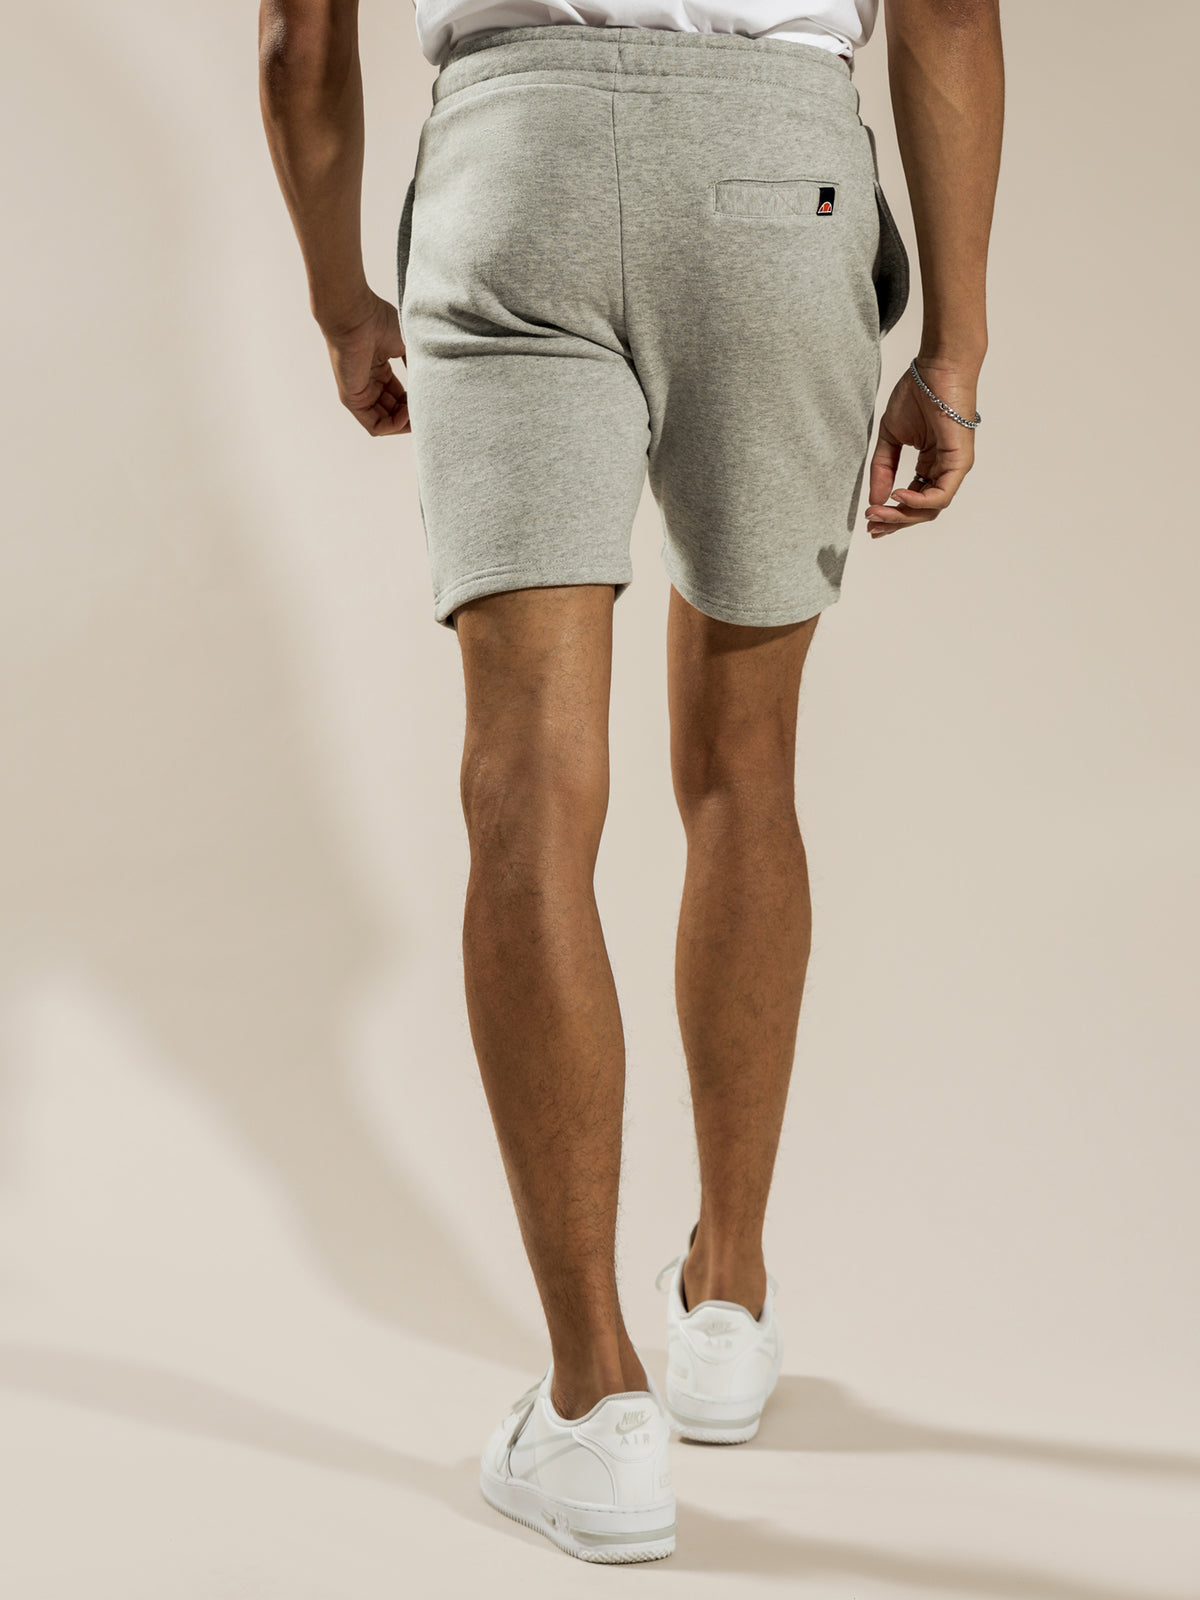 Bossini Fleece Shorts in Grey Marle